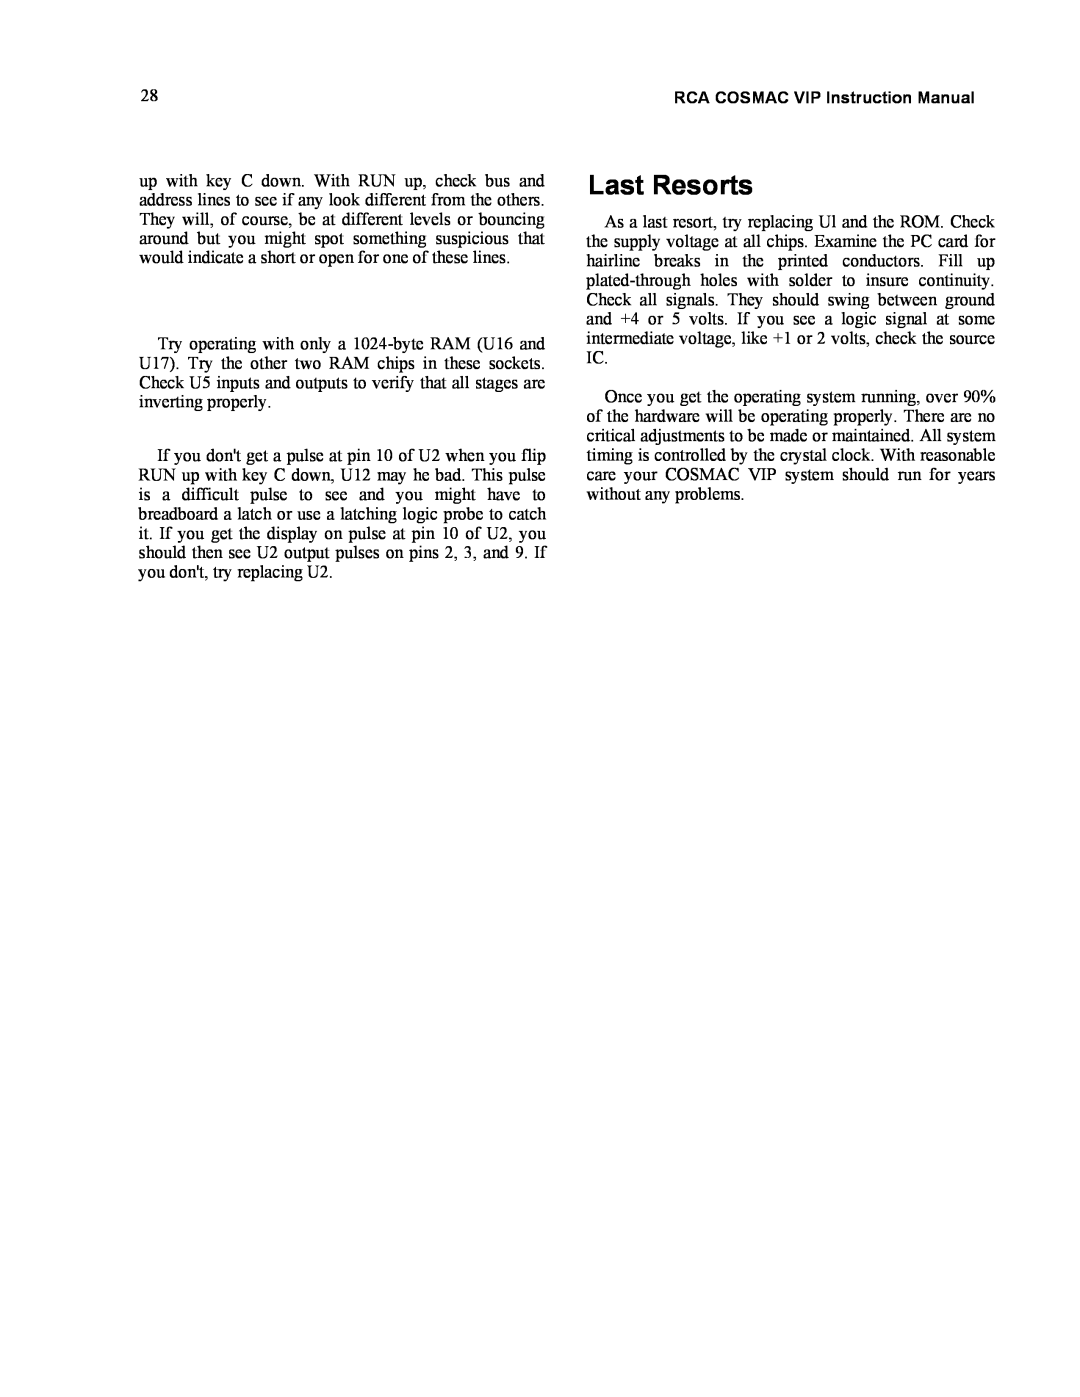 RCA CDP18S711 manual Last Resorts 